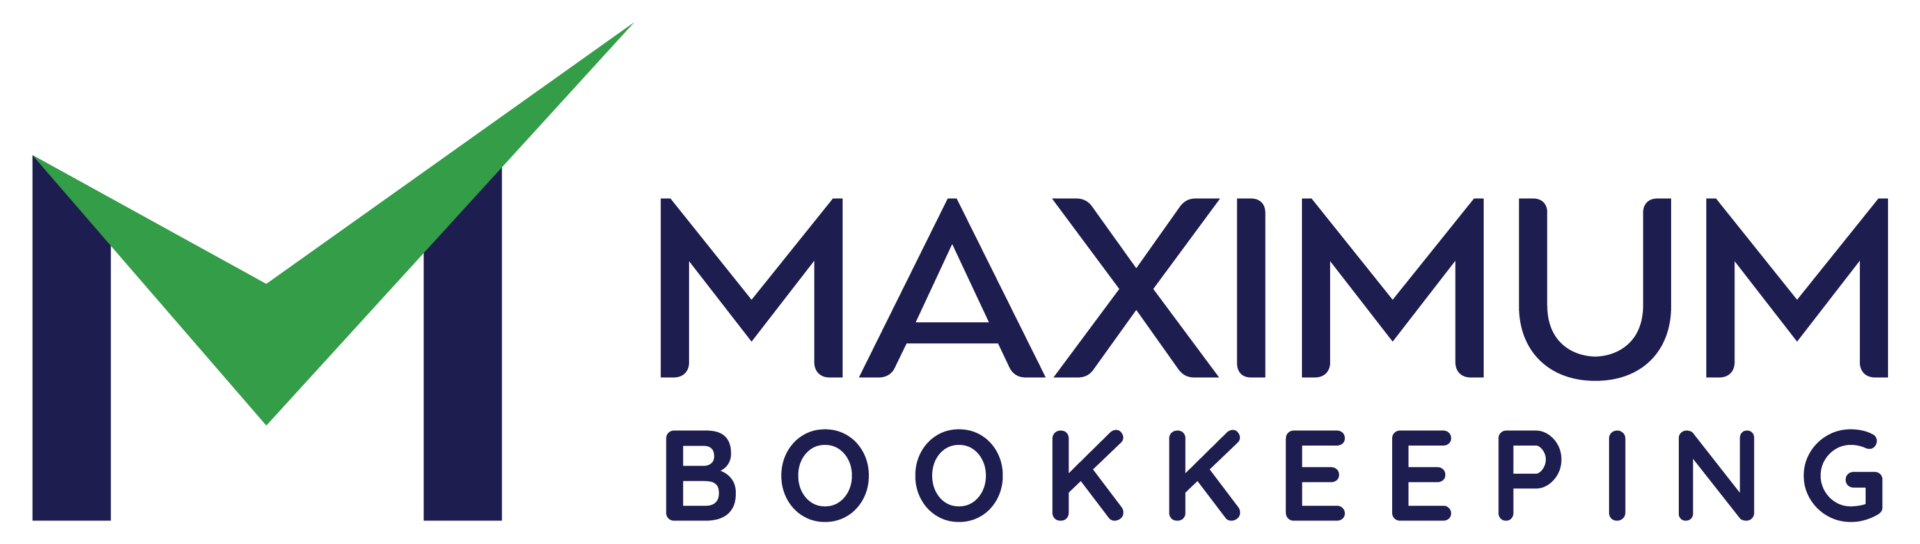 logo maximum bookkeeping